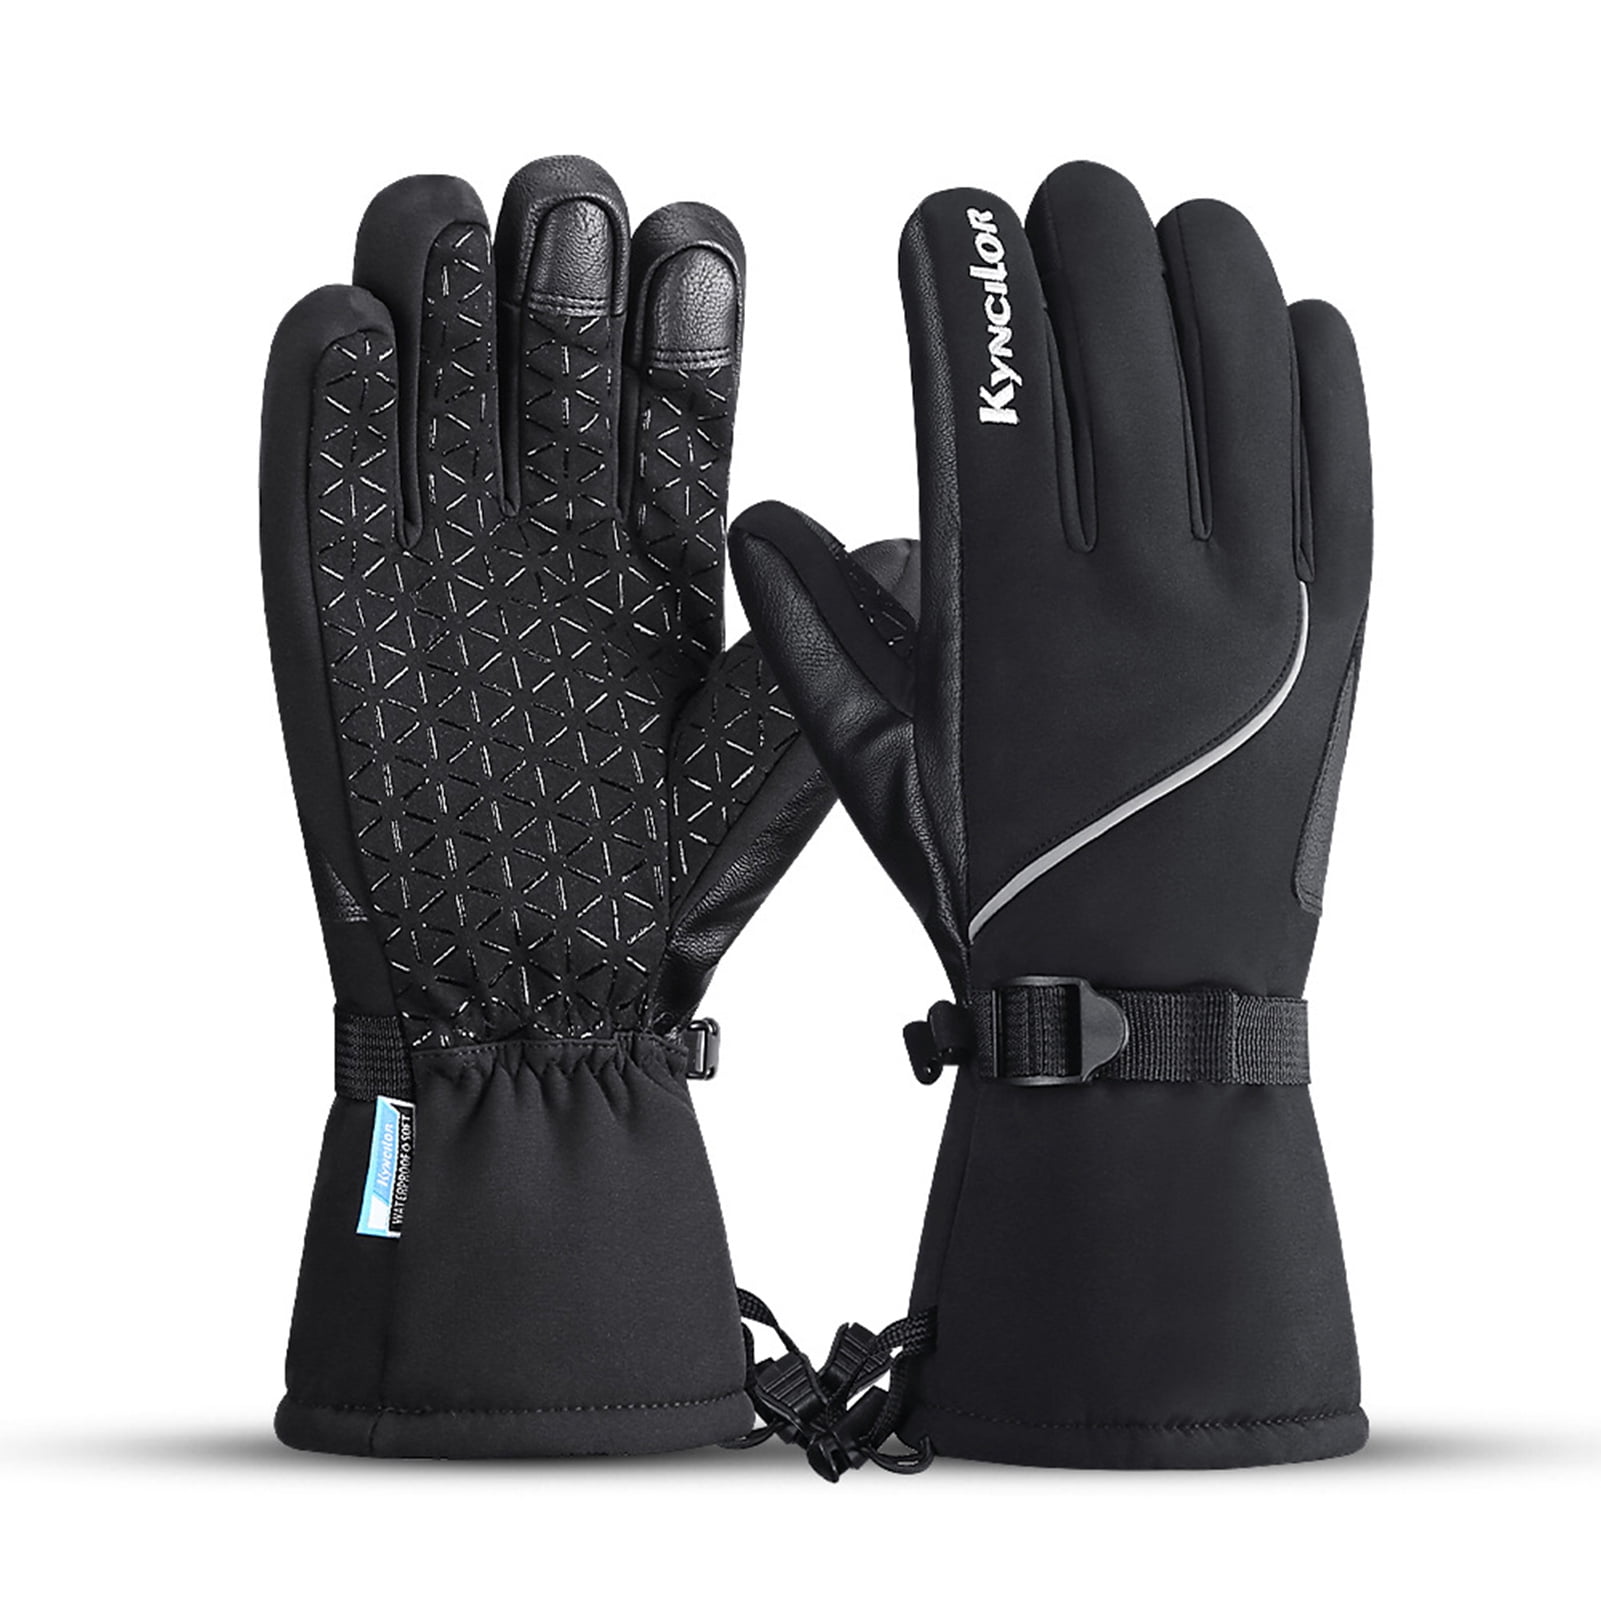 anqier Waterproof Ski Gloves for Kids 3M Thinsulate Thermal Gloves Anti Slip Warm Snow Gloves for Skiing Snowboarding Winter gloves for Children 